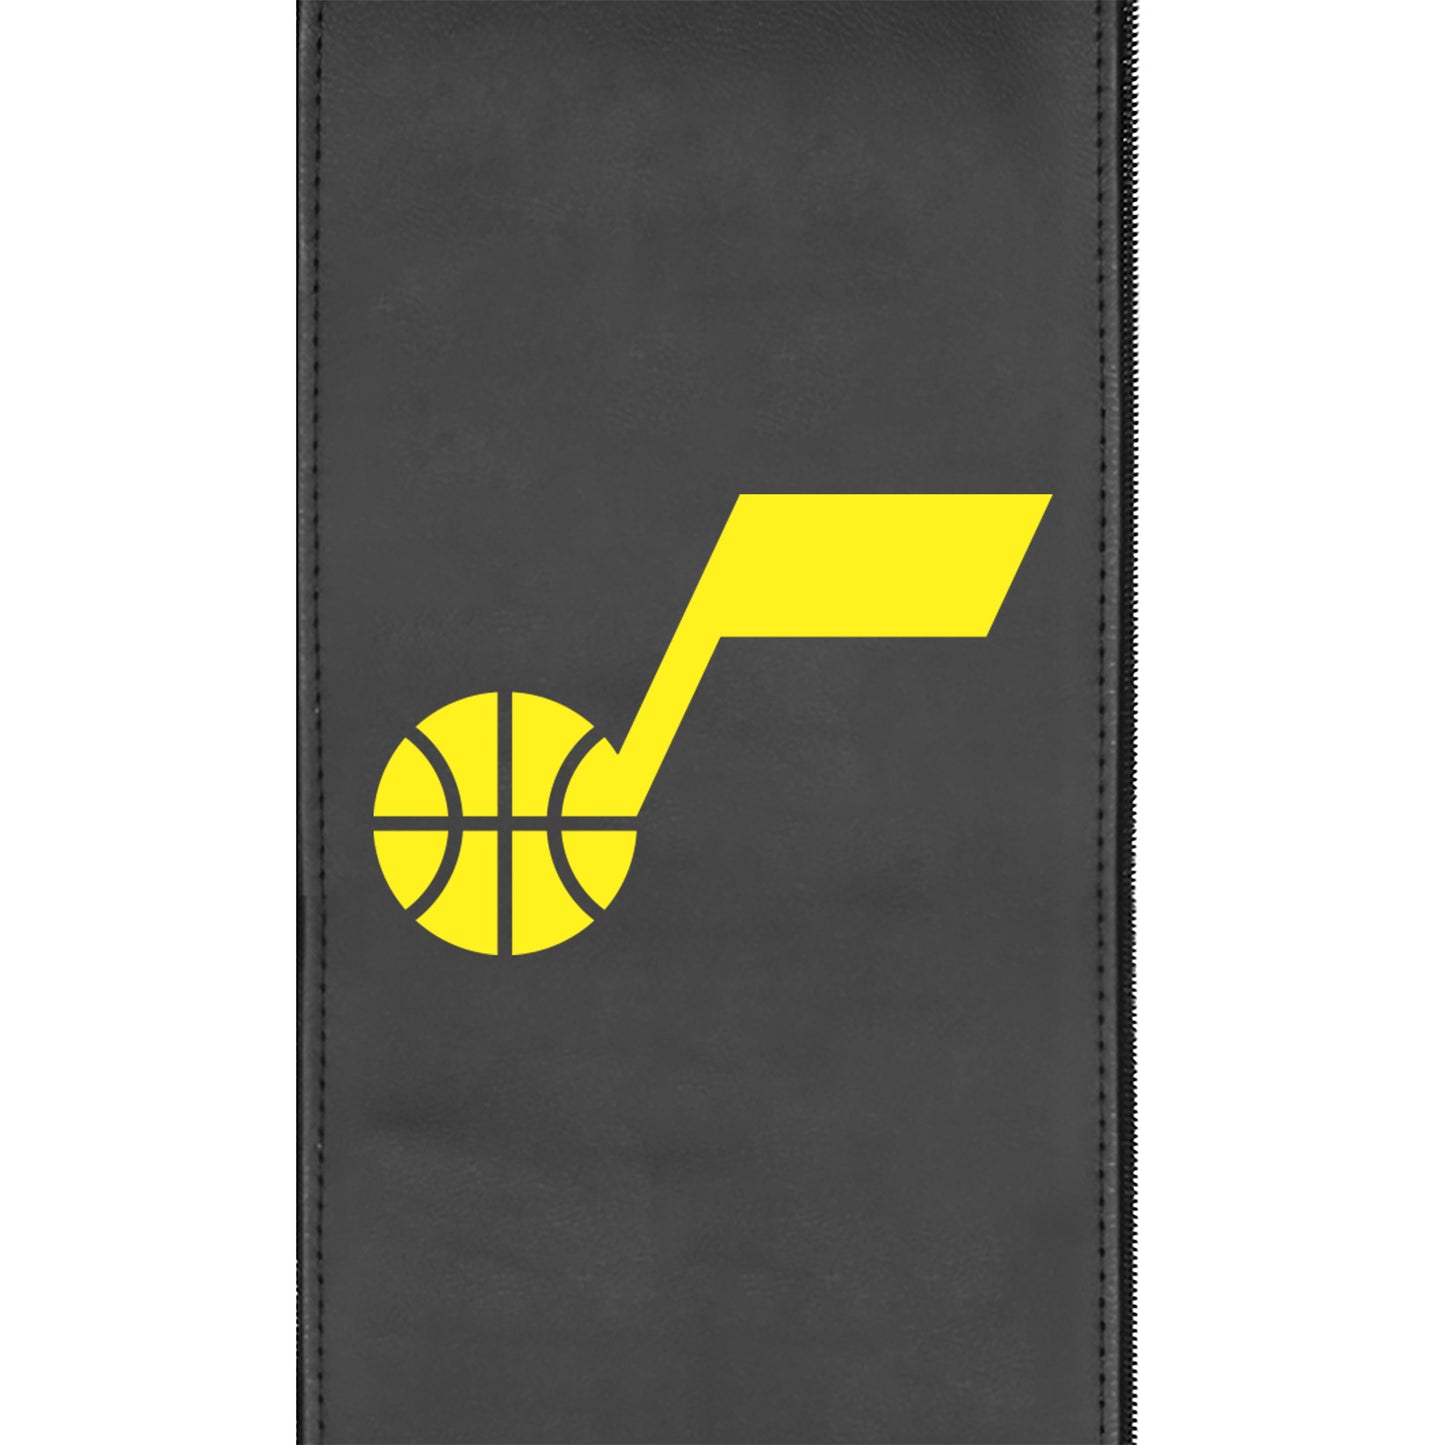 Utah Jazz Logo Primary Panel